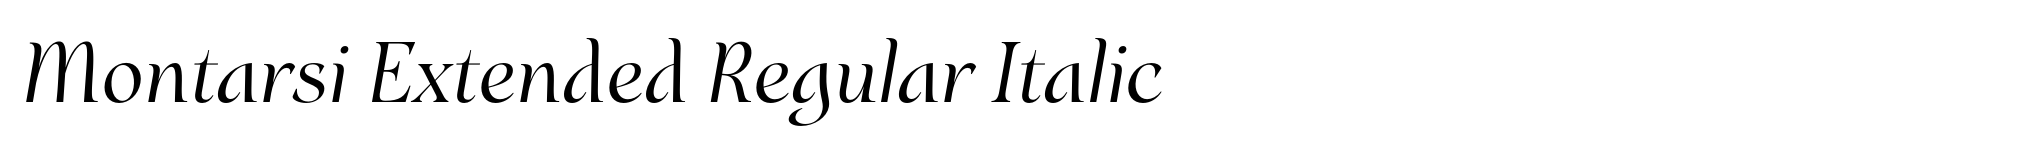 Montarsi Extended Regular Italic image